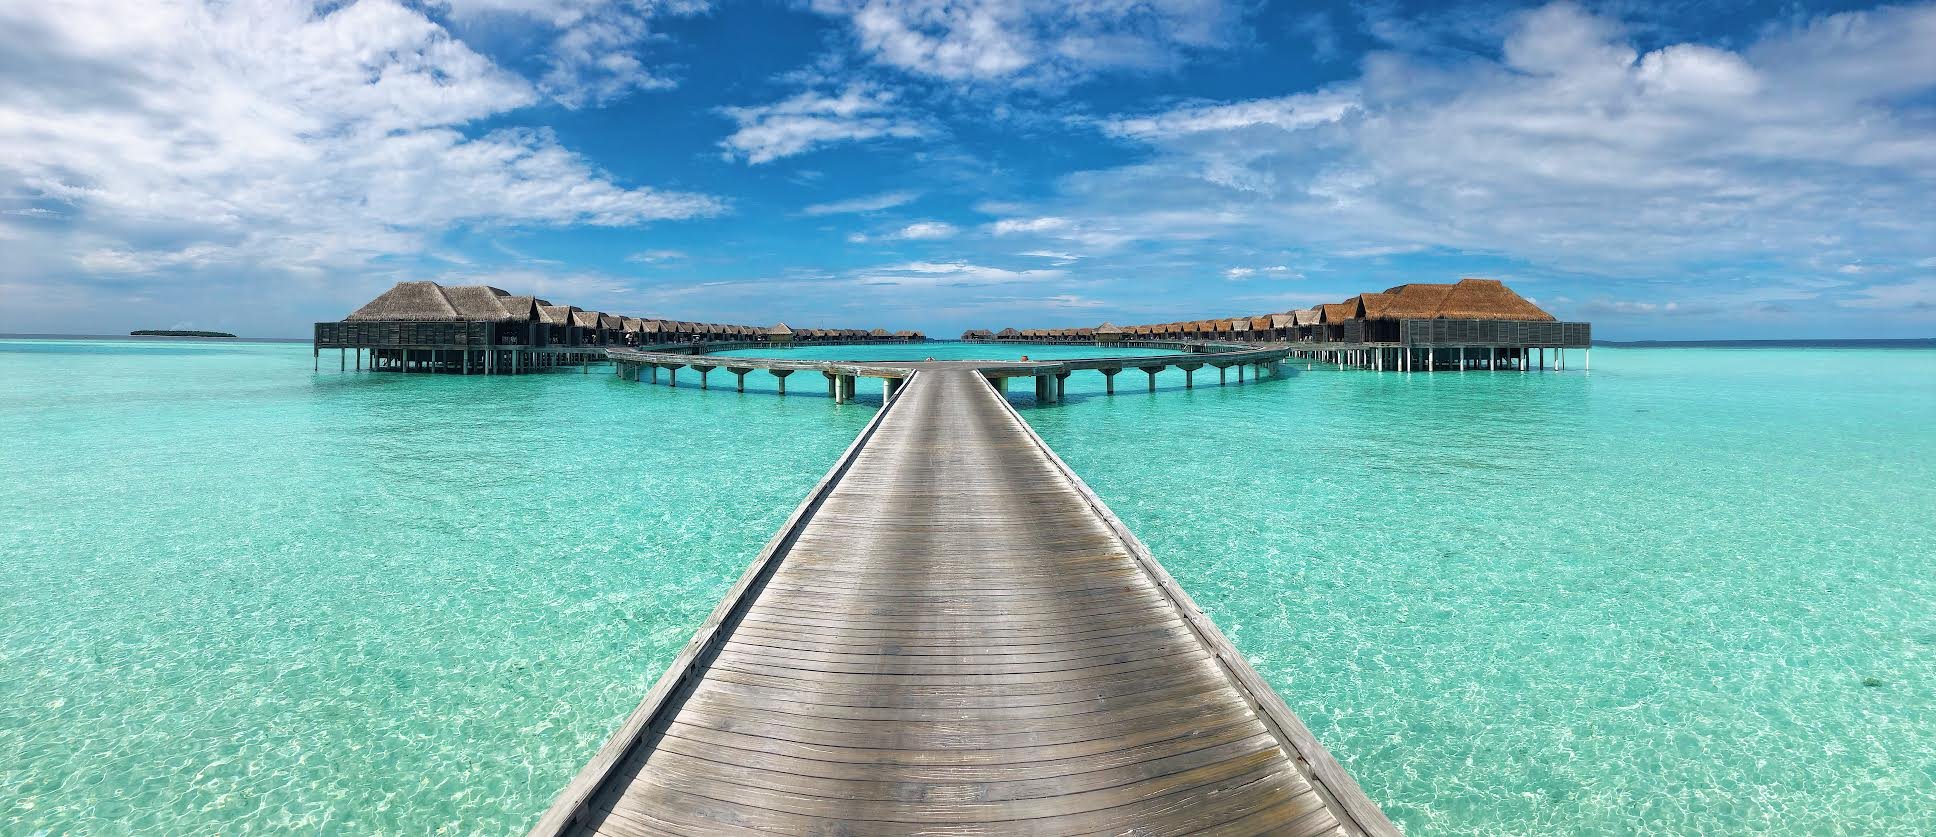 Best-Maldives-travel-guide-tips-Muslim-blog-overwater-villas